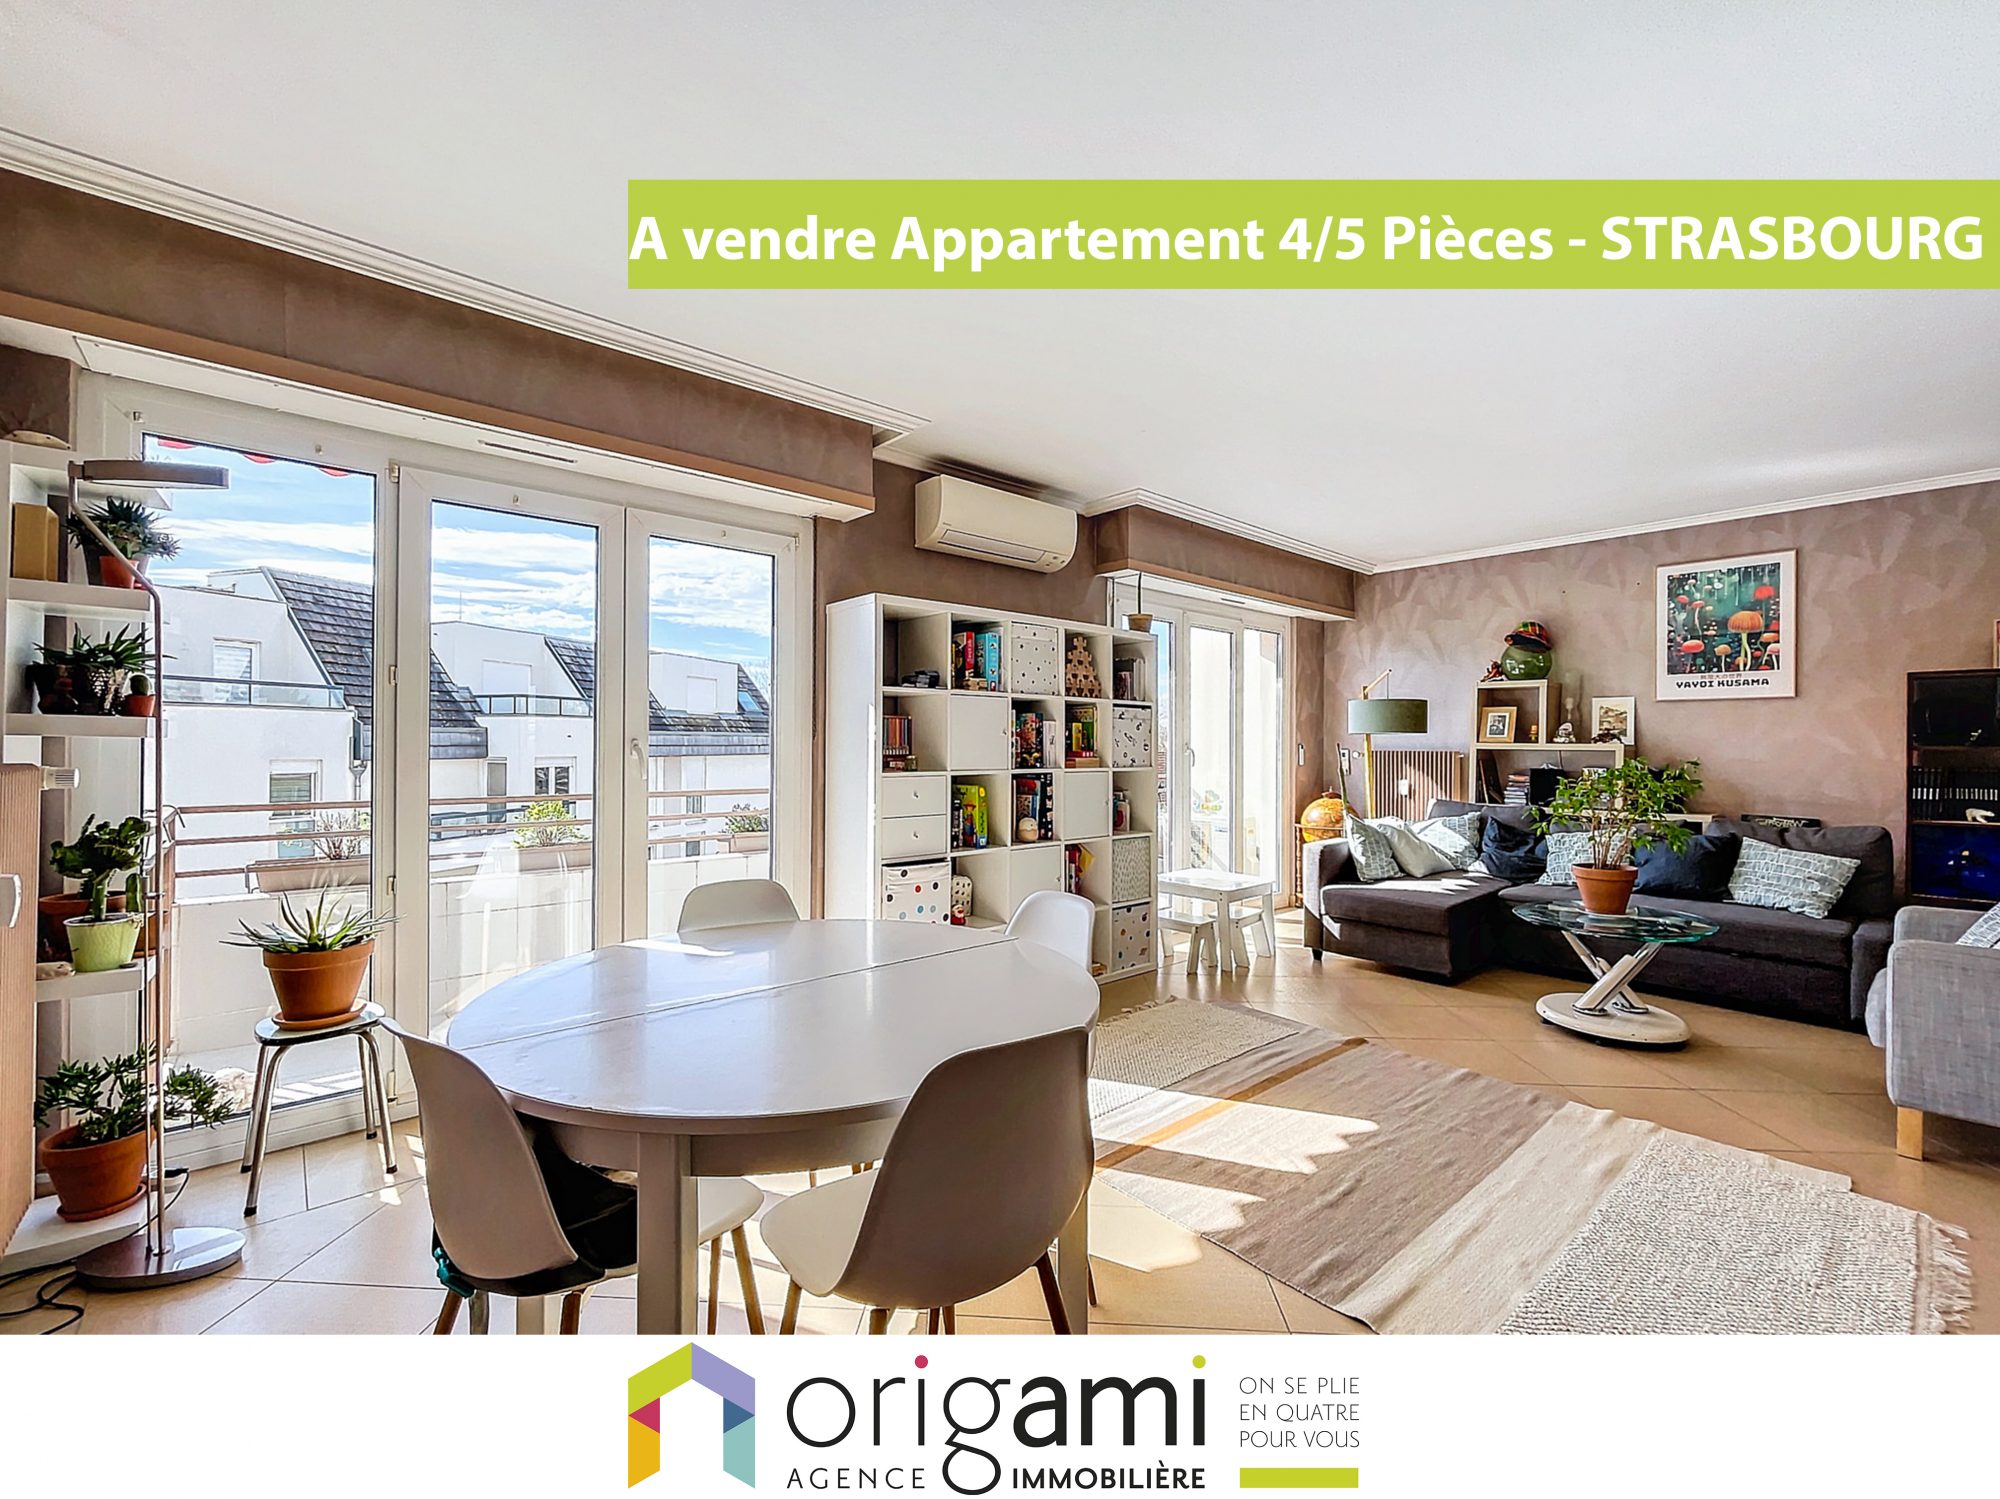 Vente Appartement 96m² 4 Pièces à Strasbourg (67000) - Origami